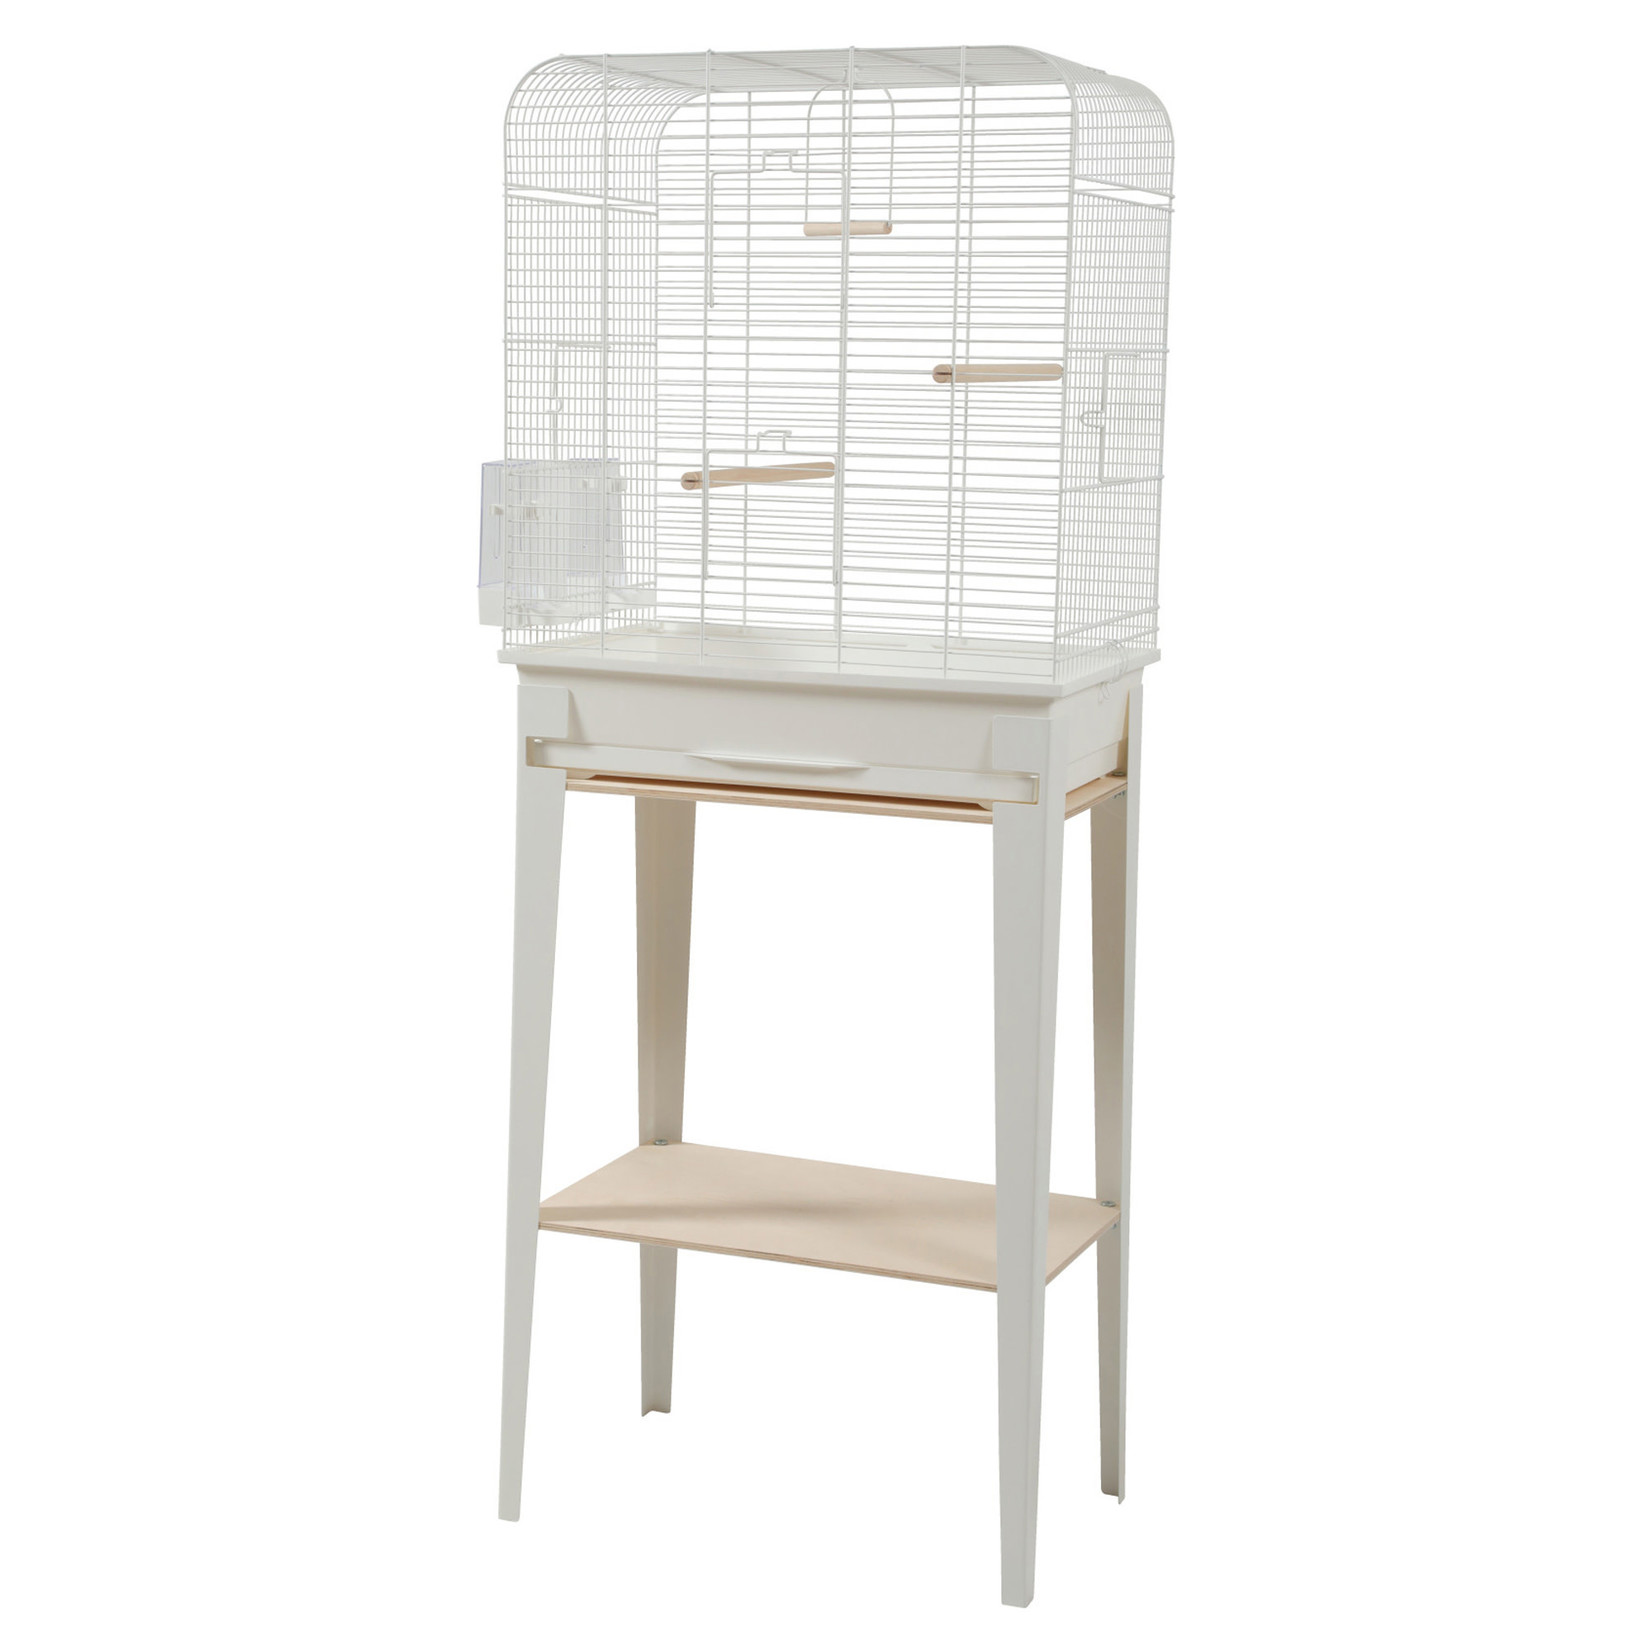 ZOLUX Zolux Chic Loft Cage & Stand - Large - White - 53.5 x 33.5 x 64 cm